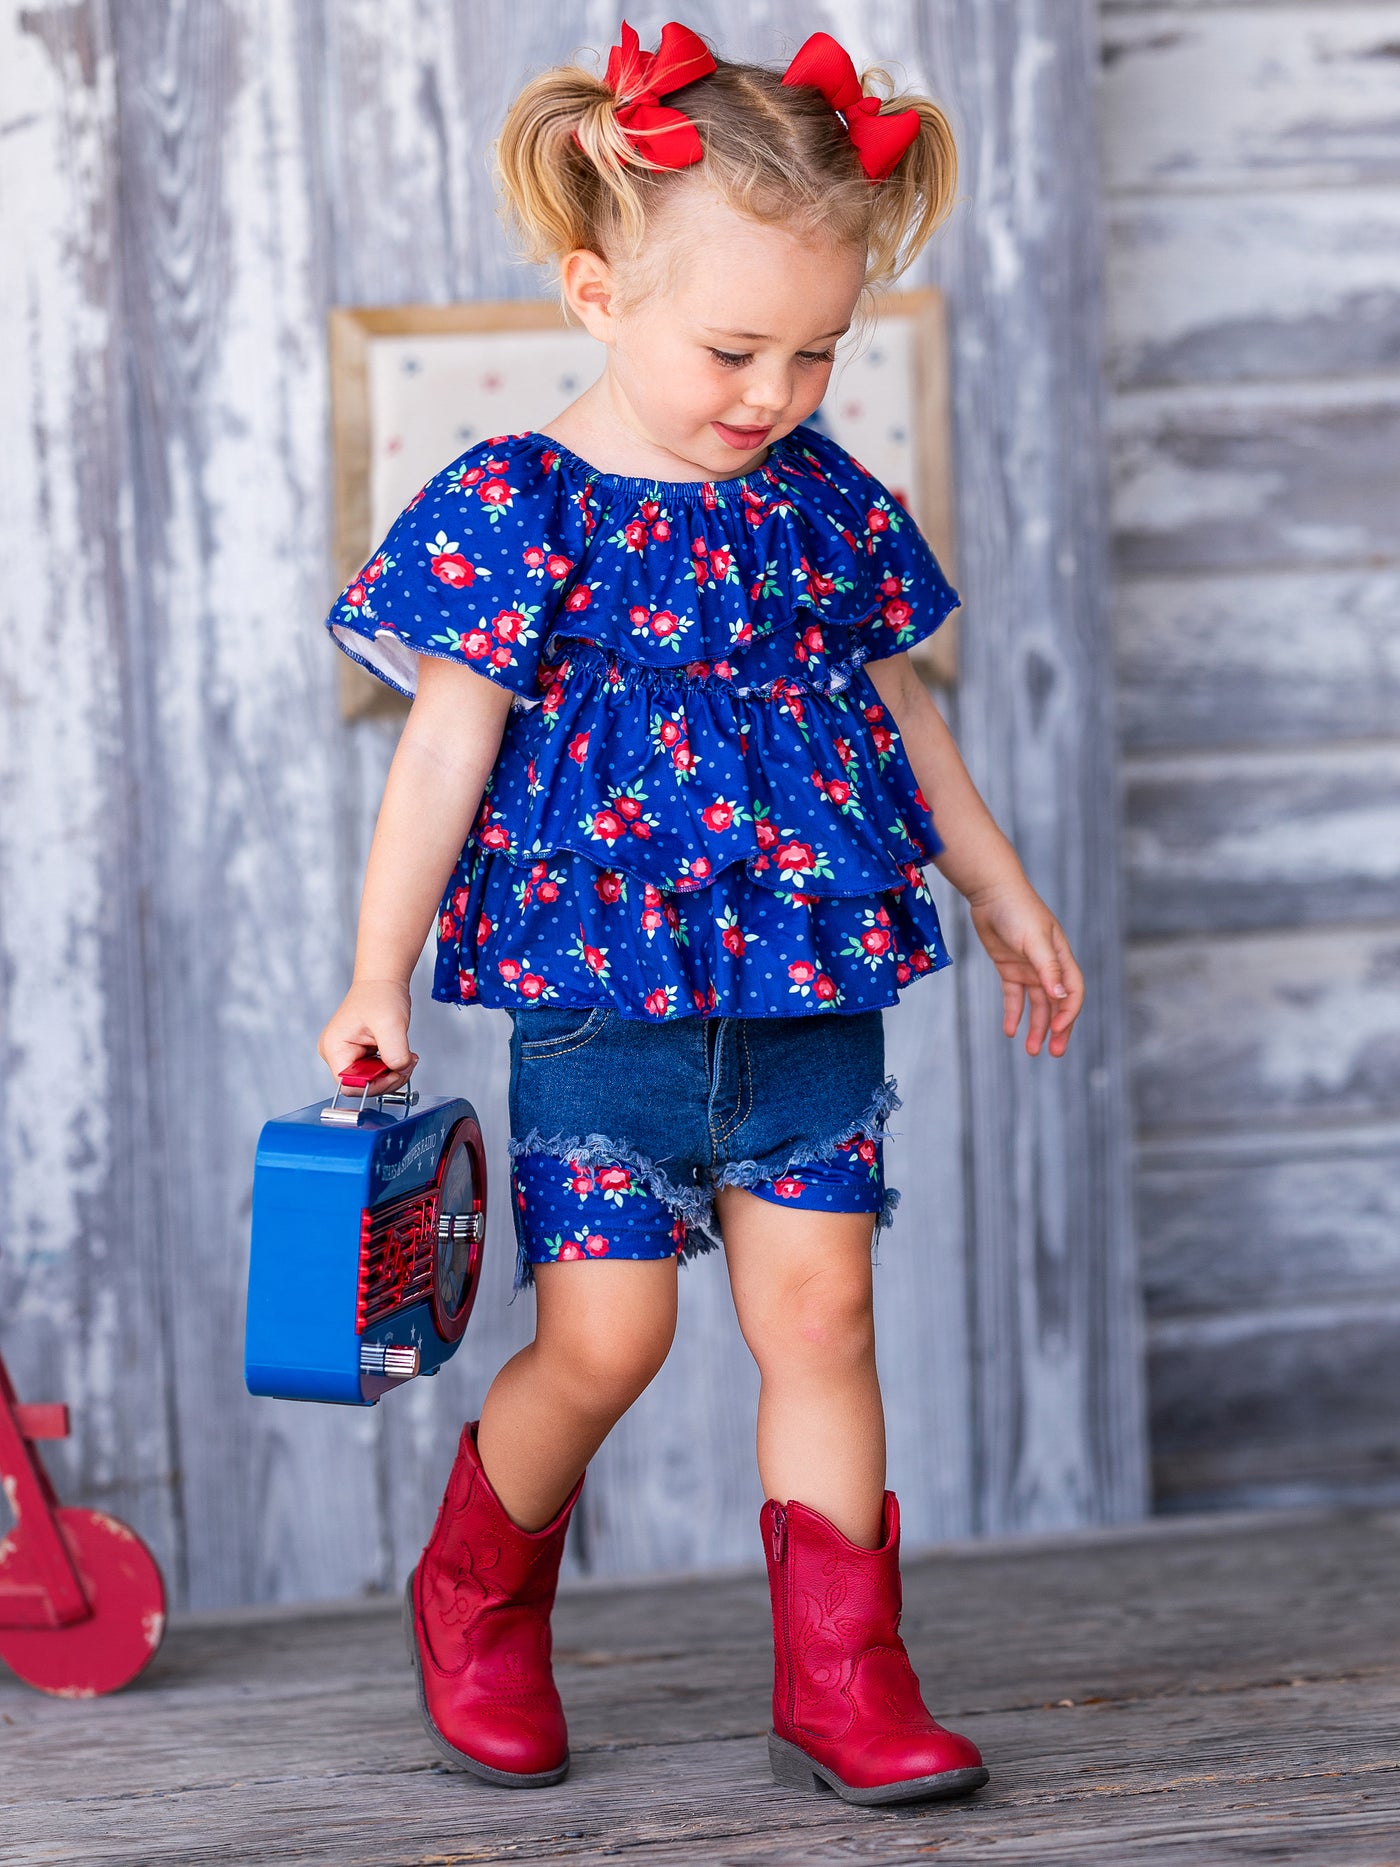 Cute Toddler Outfit | Girls Floral Polka Dot Top & Denim Shorts Set